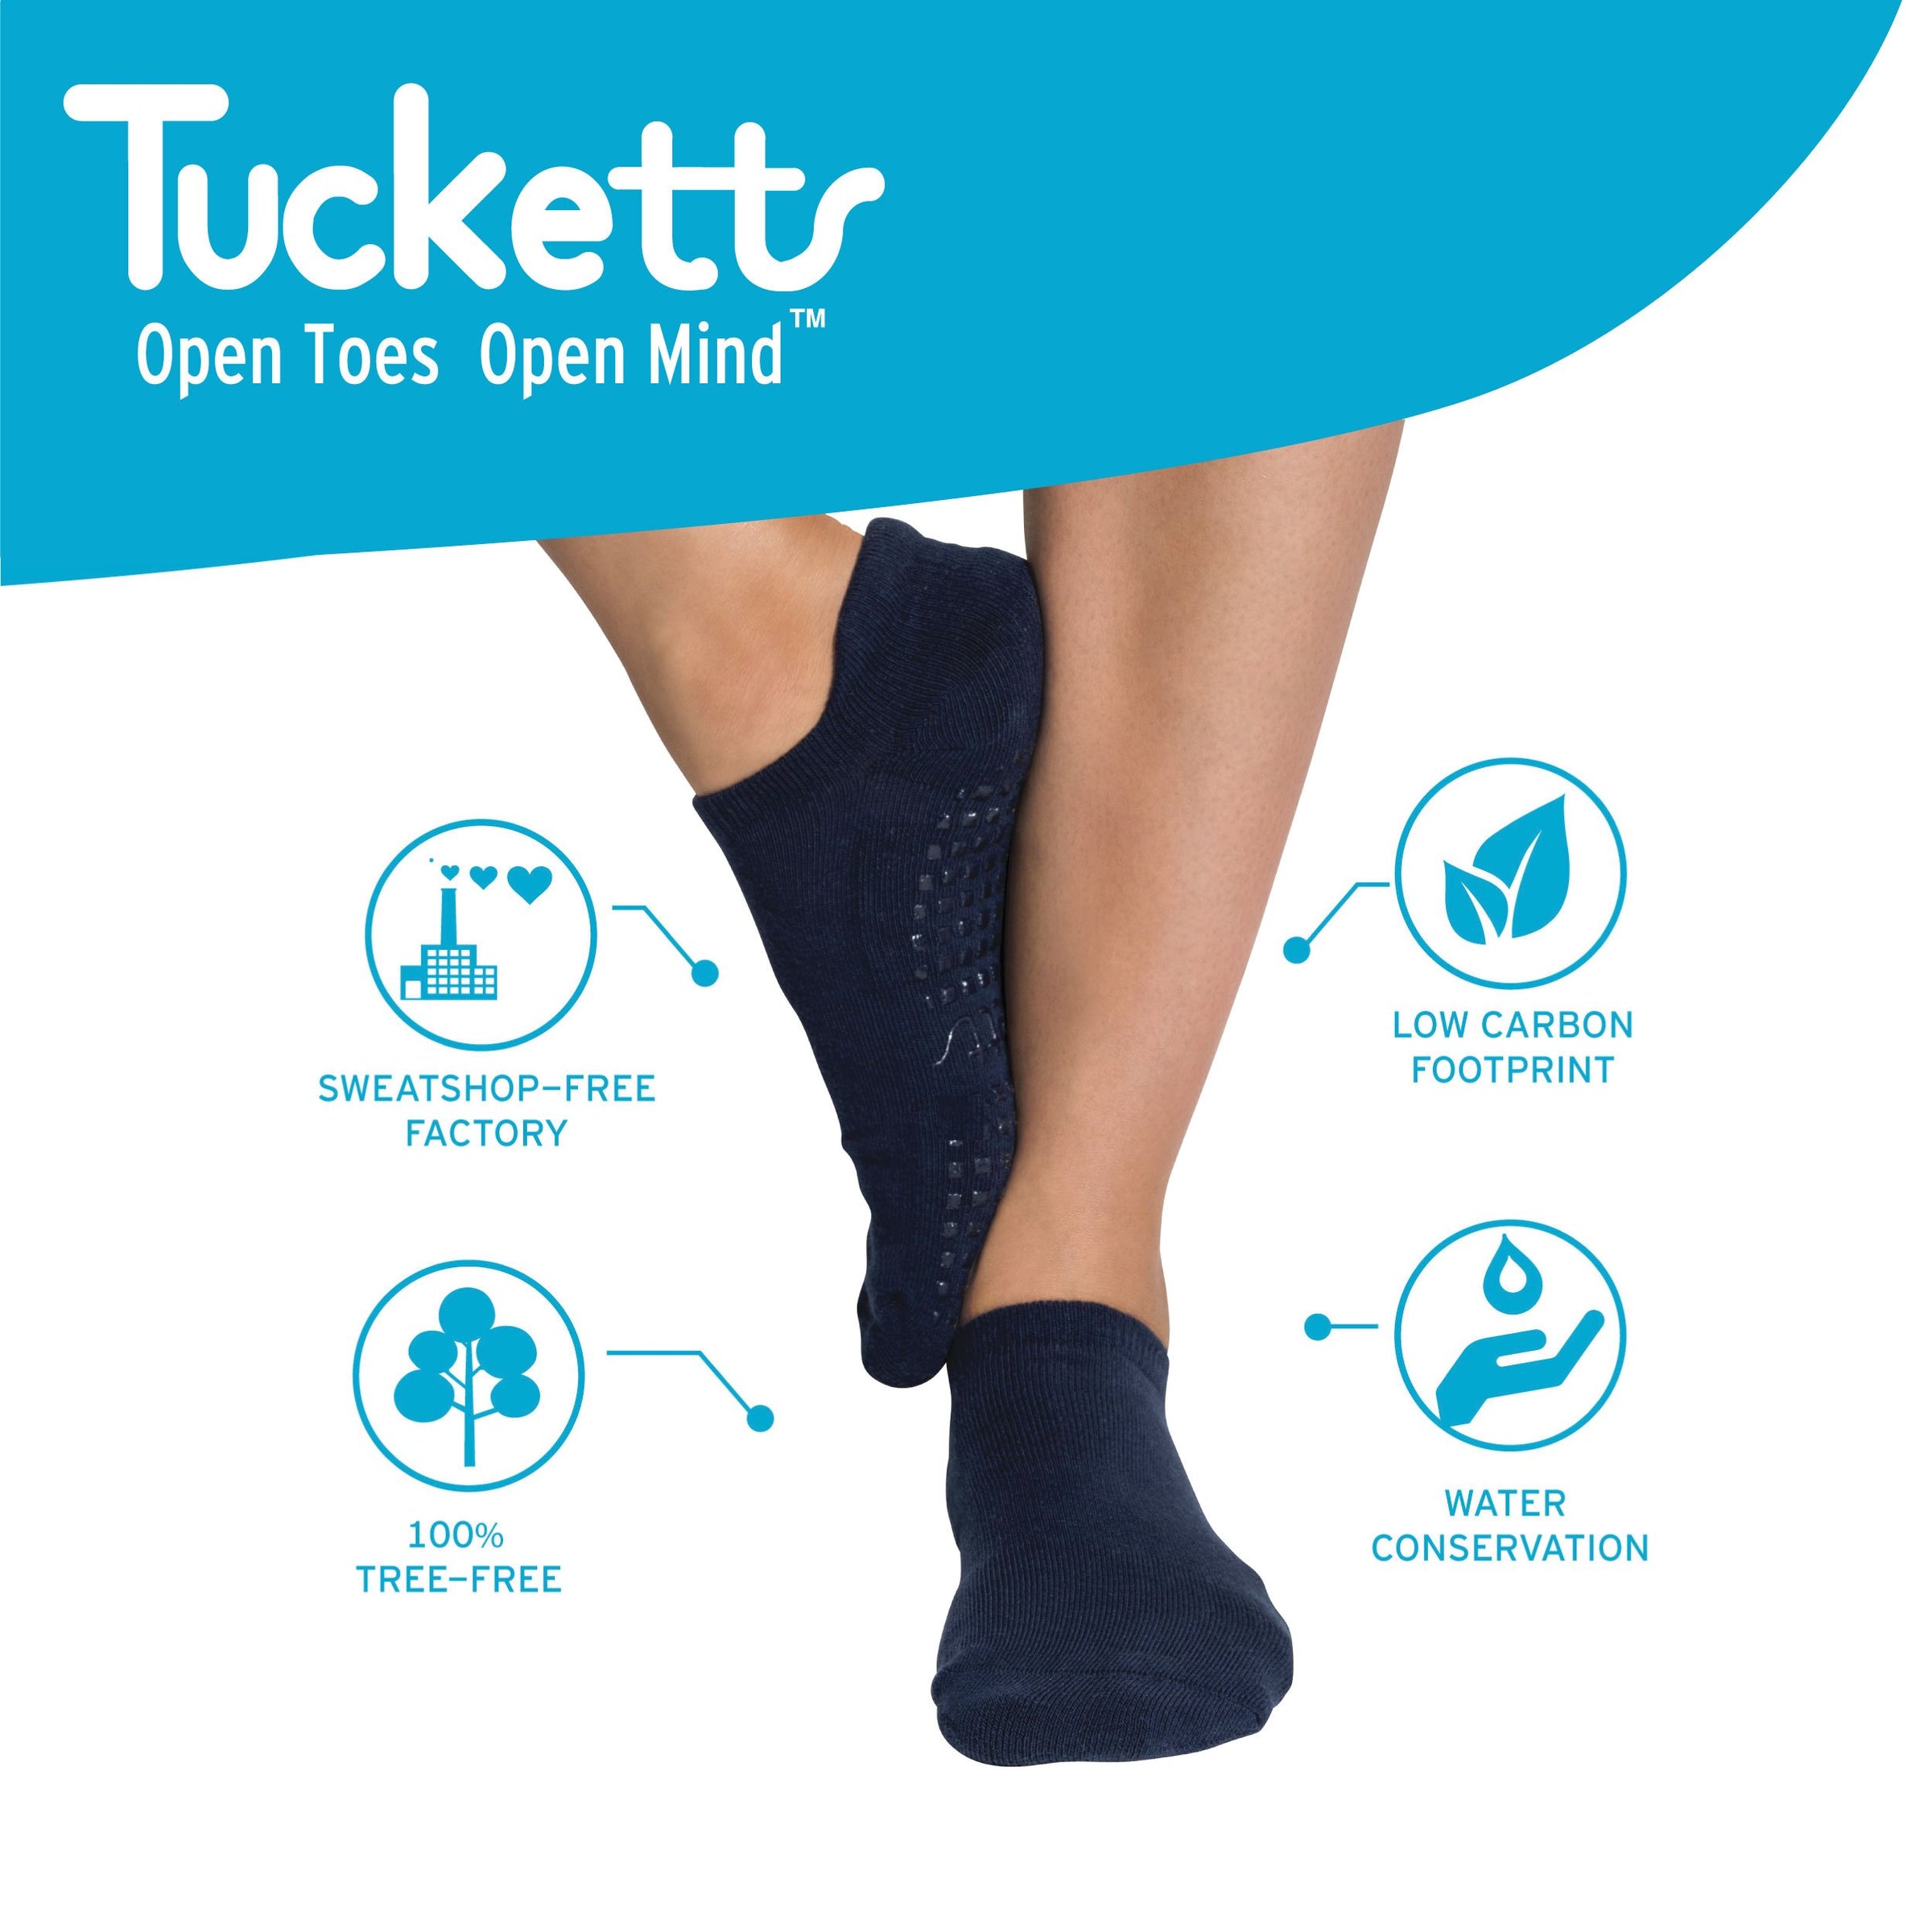 Tucketts Socks